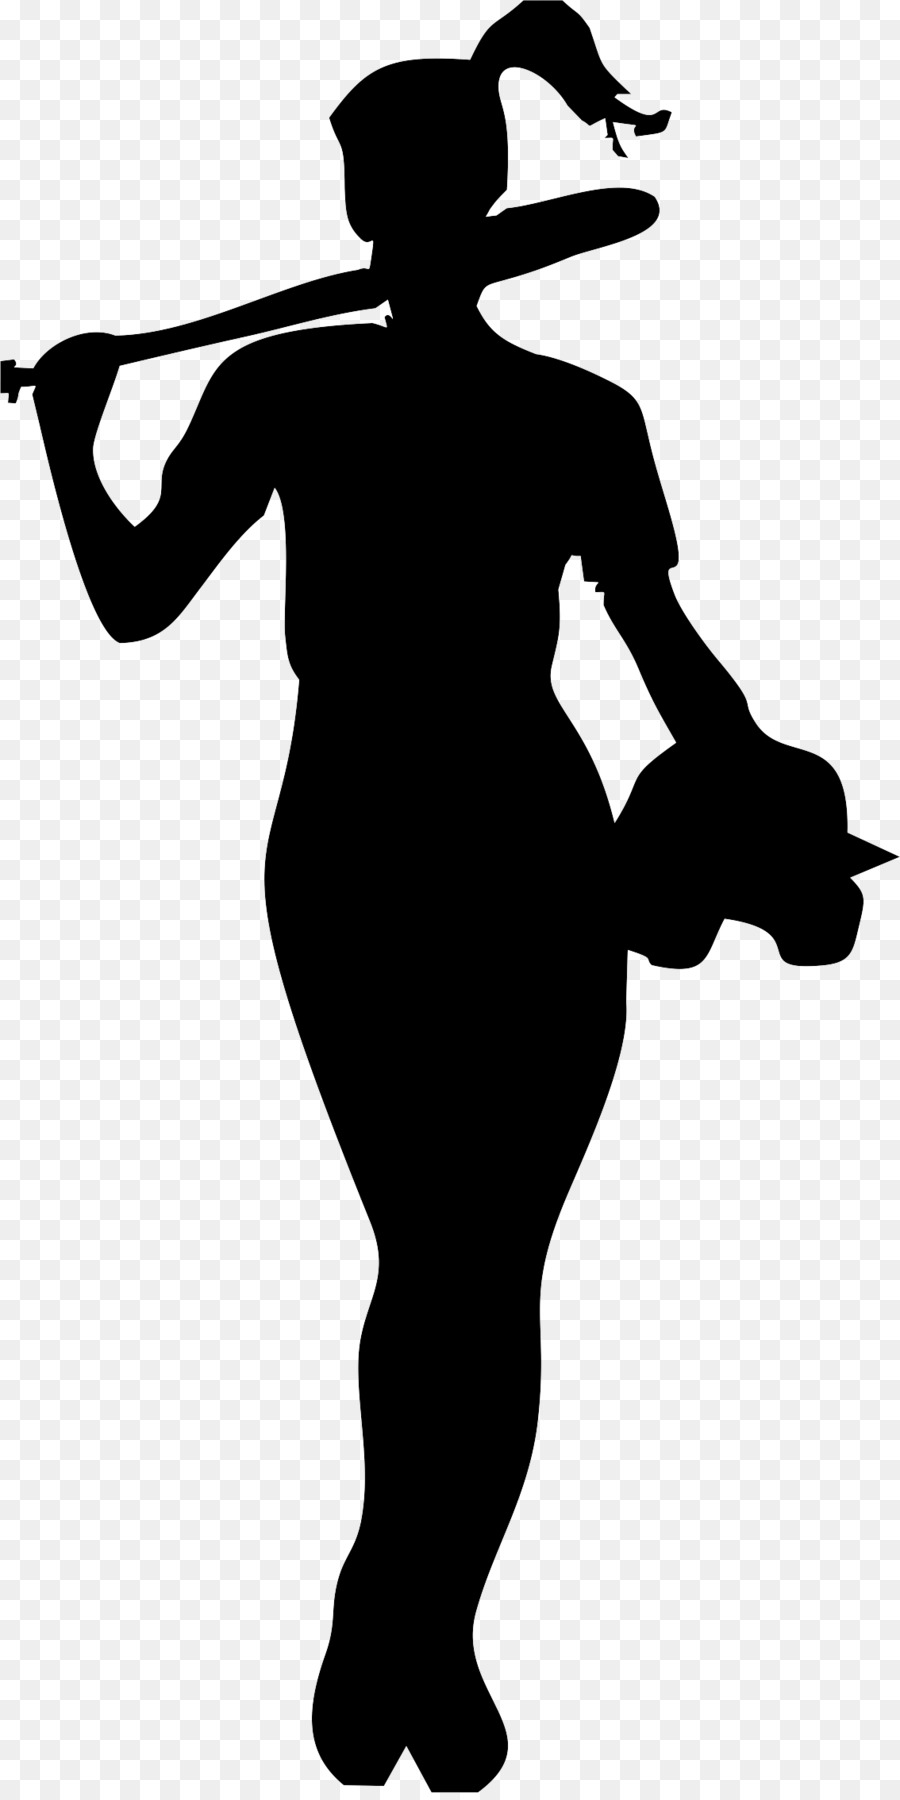 Baseball Batting Silhouette Woman Clip art - baseball png download - 1134*2259 - Free Transparent Baseball png Download.